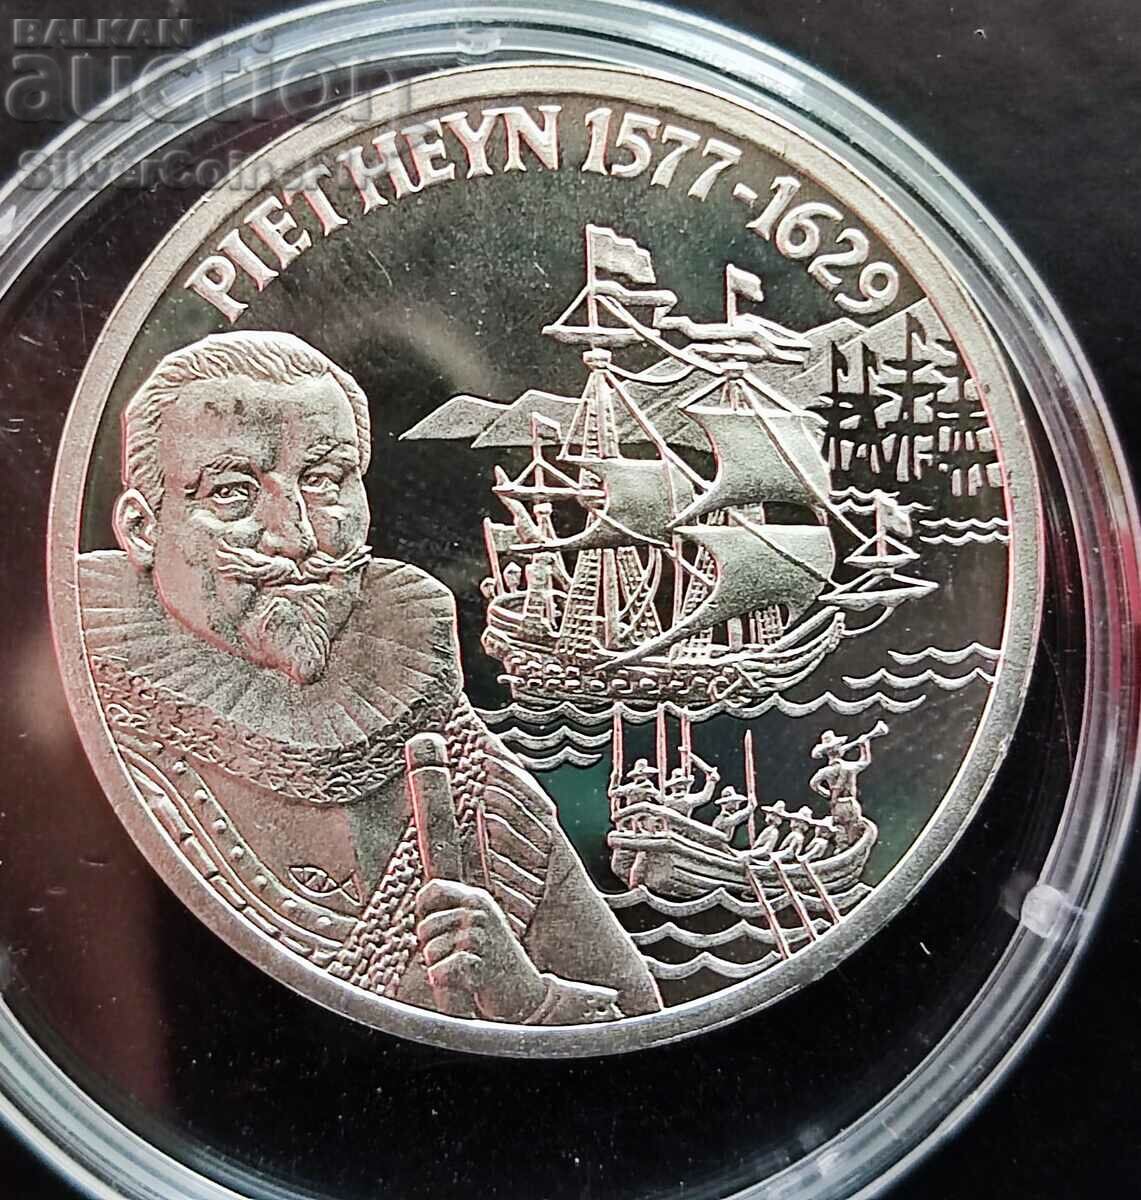 Silver Medal Peten Netherlands